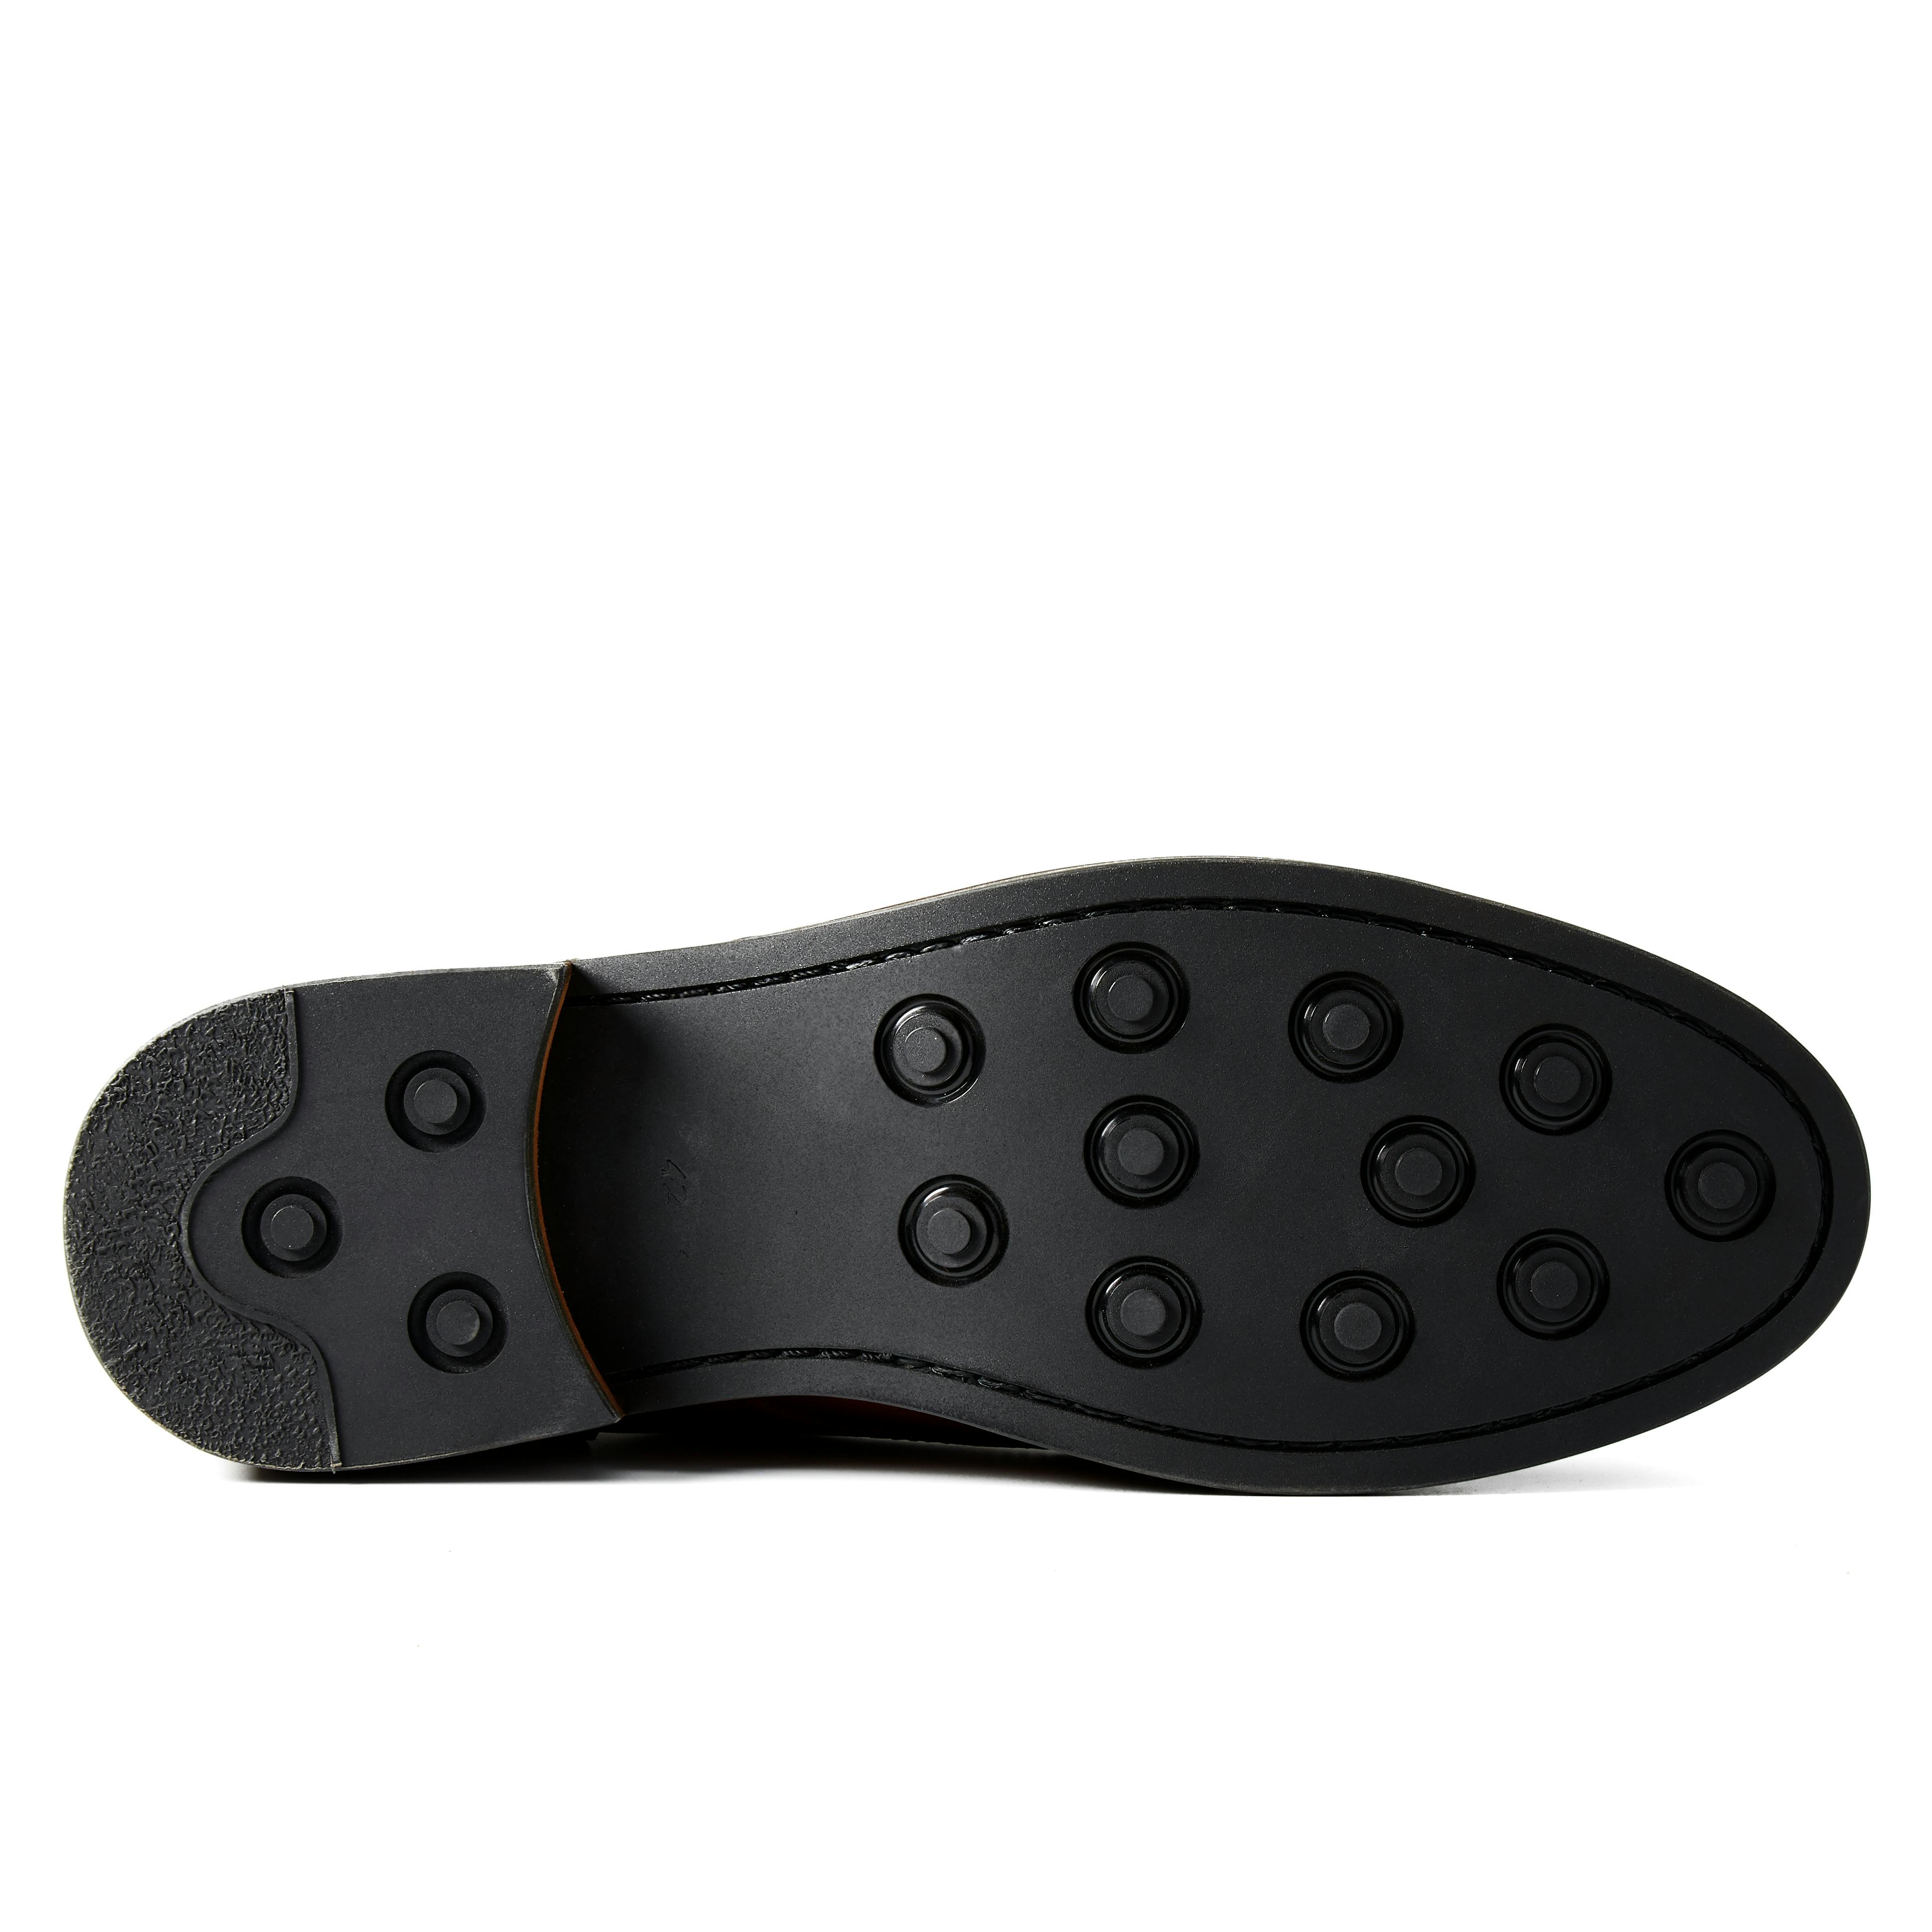 Rhodes Footwear Dean Boot (cap toe)